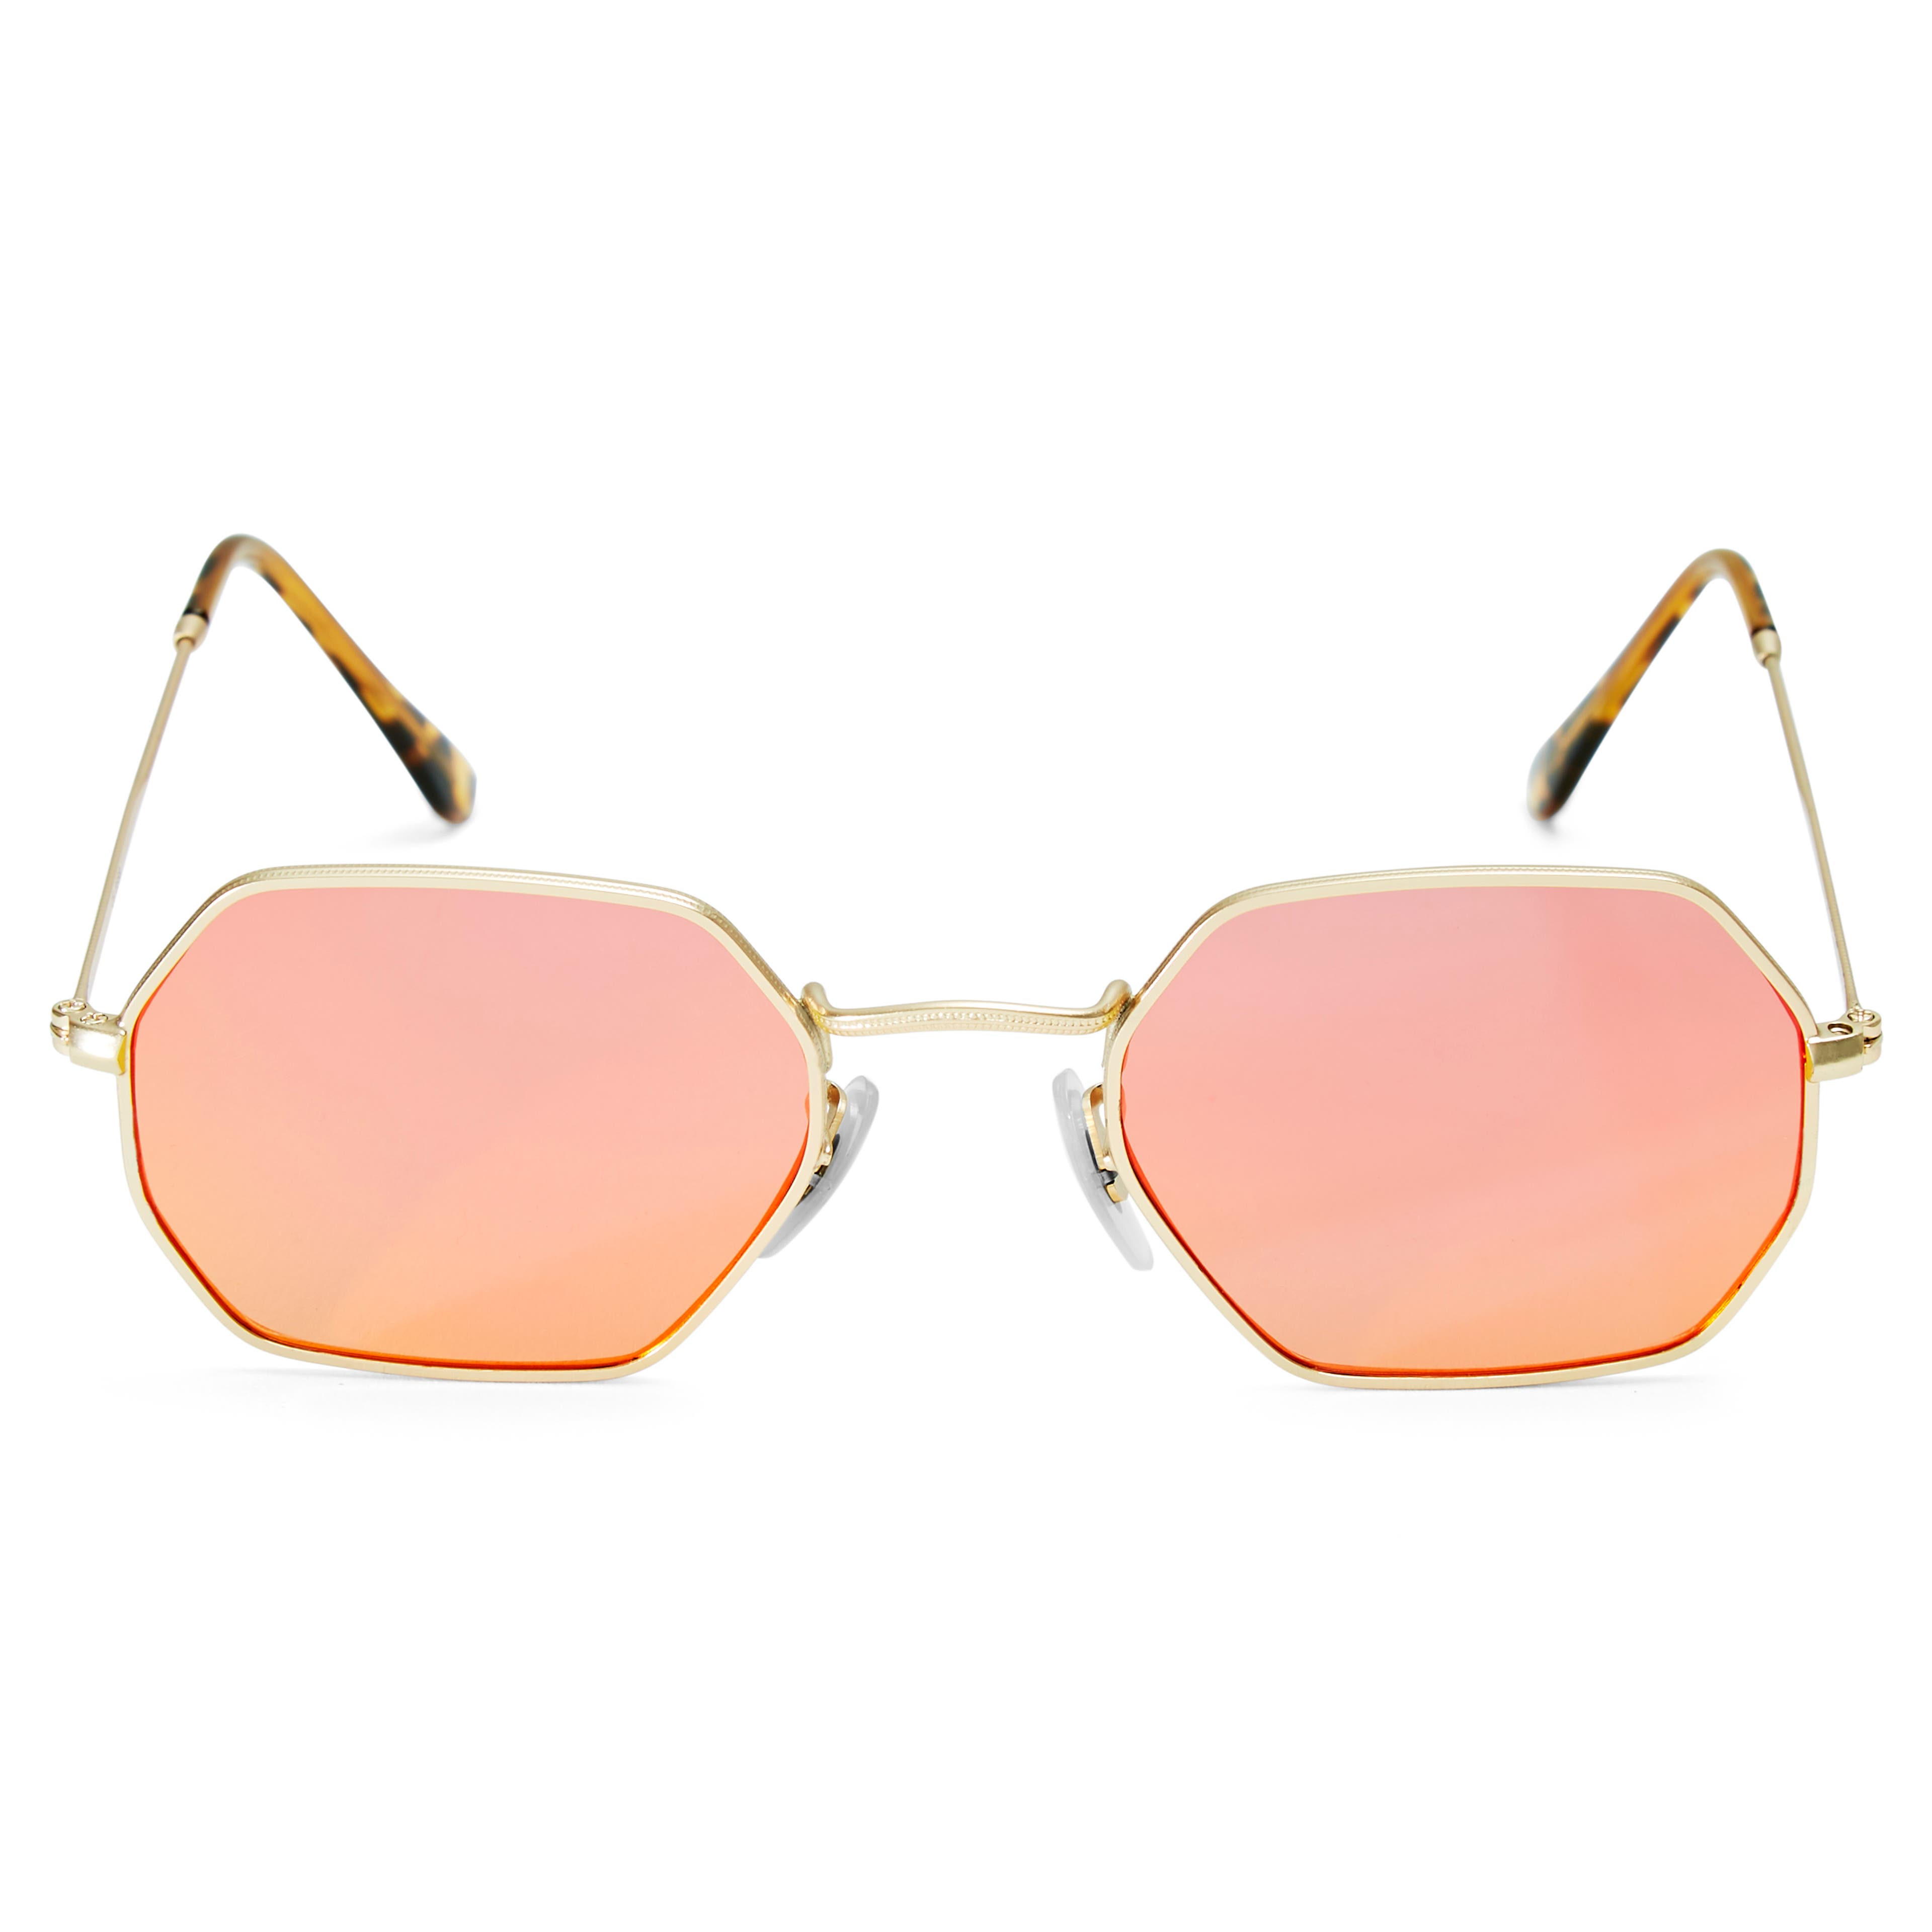 Groovy Gold-Tone & Orange Sunglasses